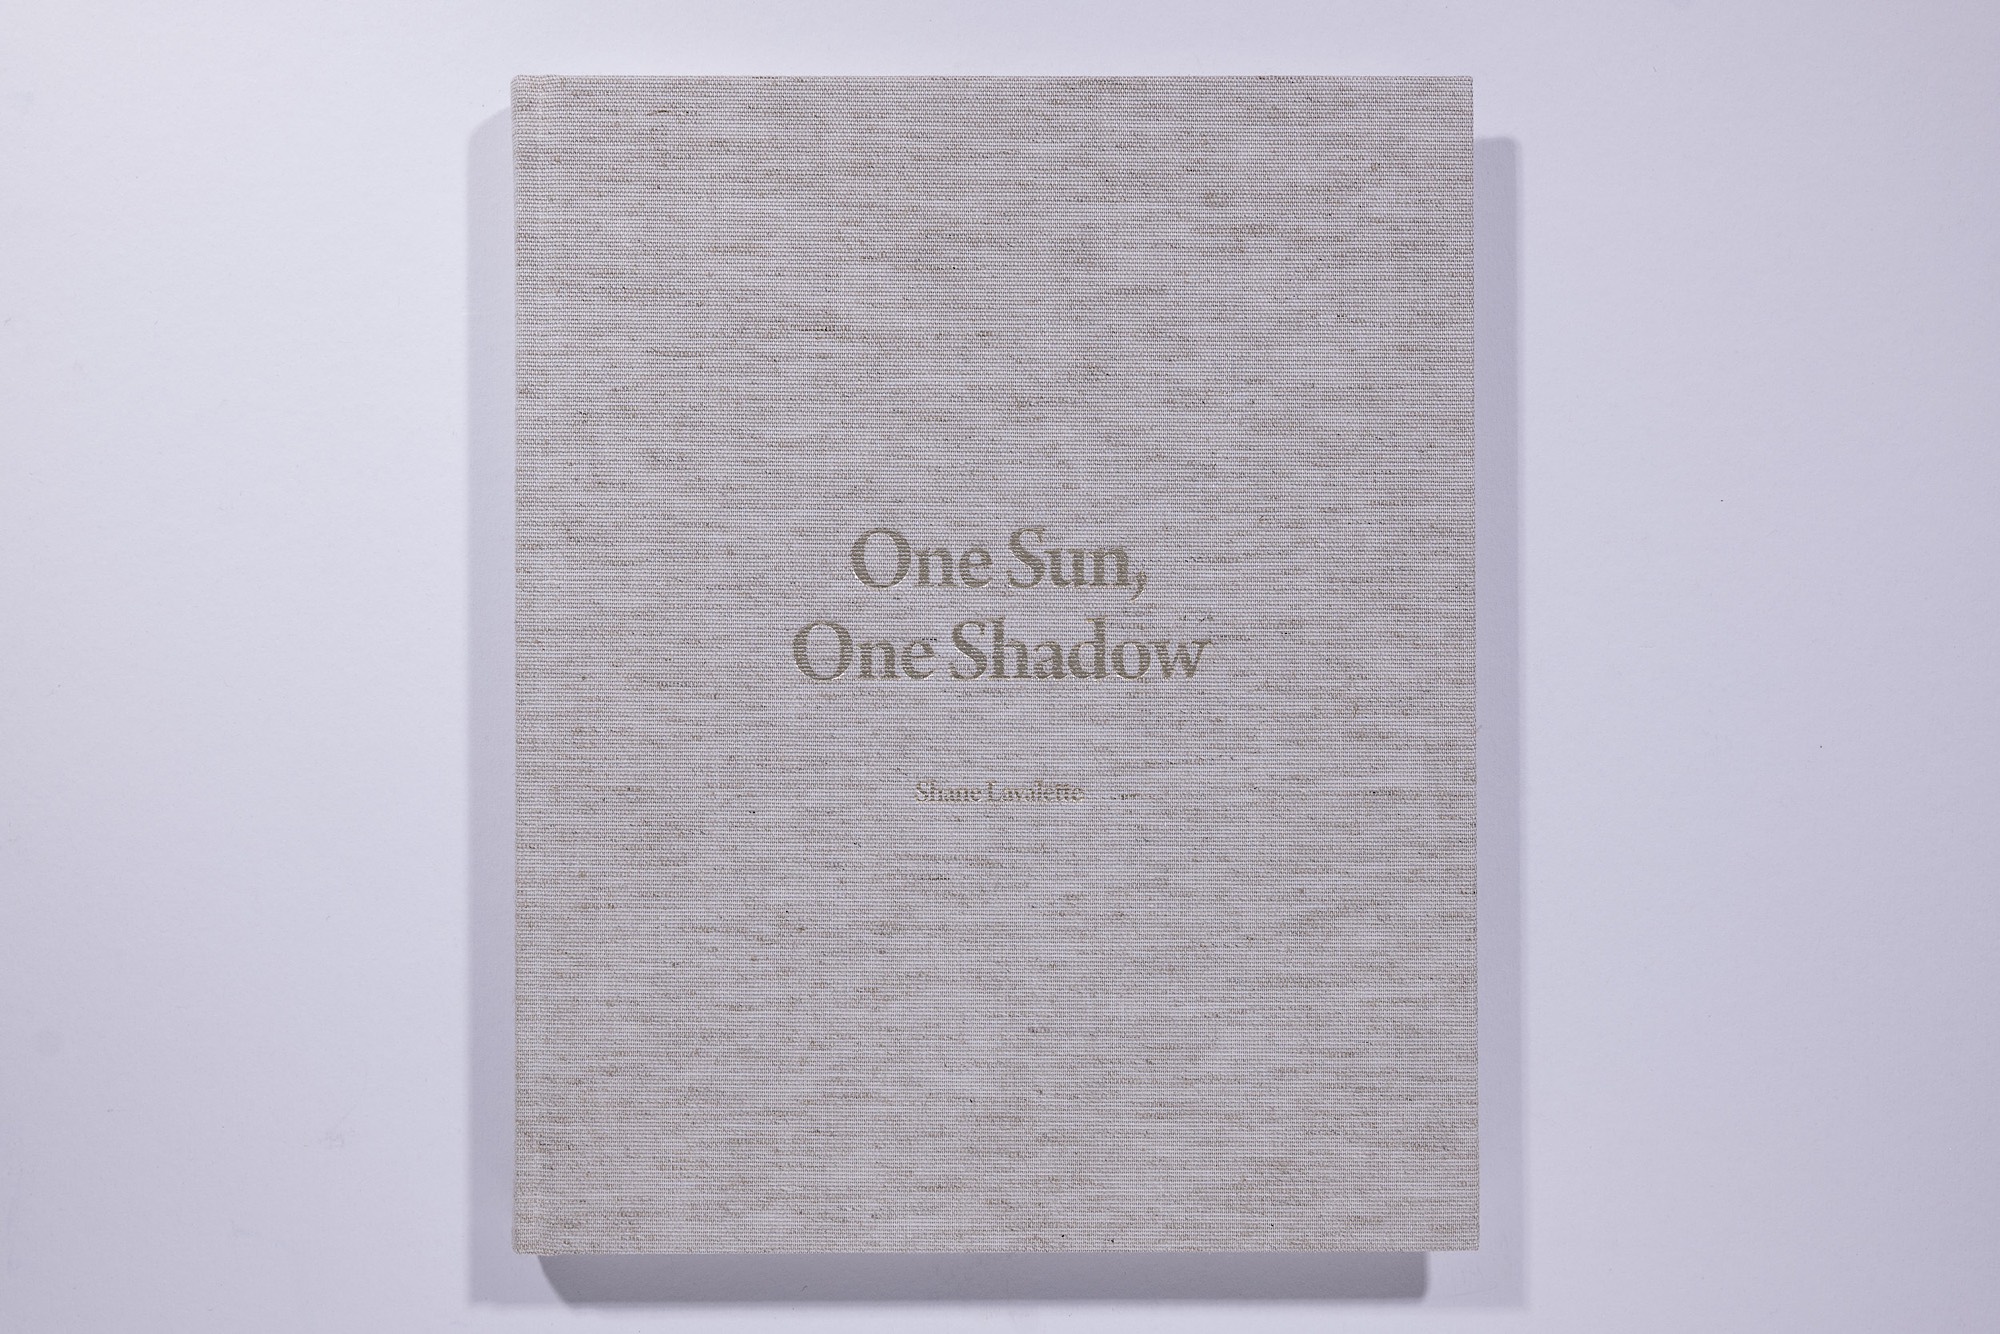 Shane Lavalette - One Sun, One Shadow